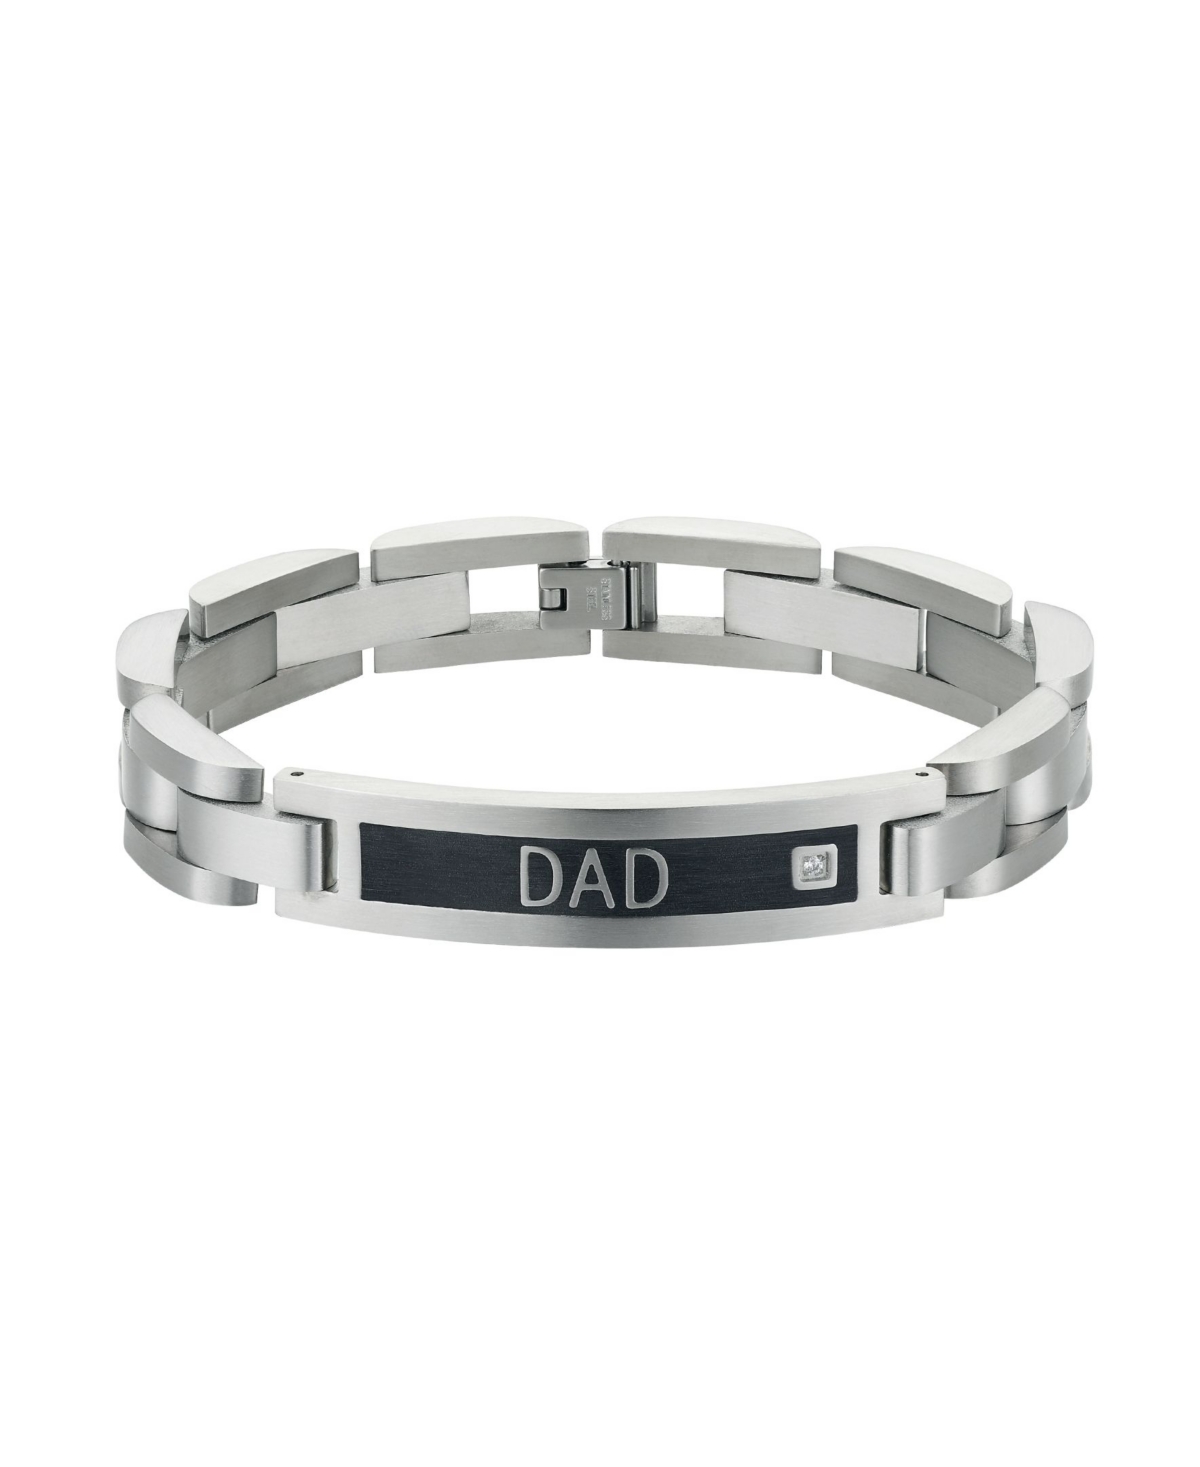 He Rocks Men's Stainless Steel Dad Link Bracelet